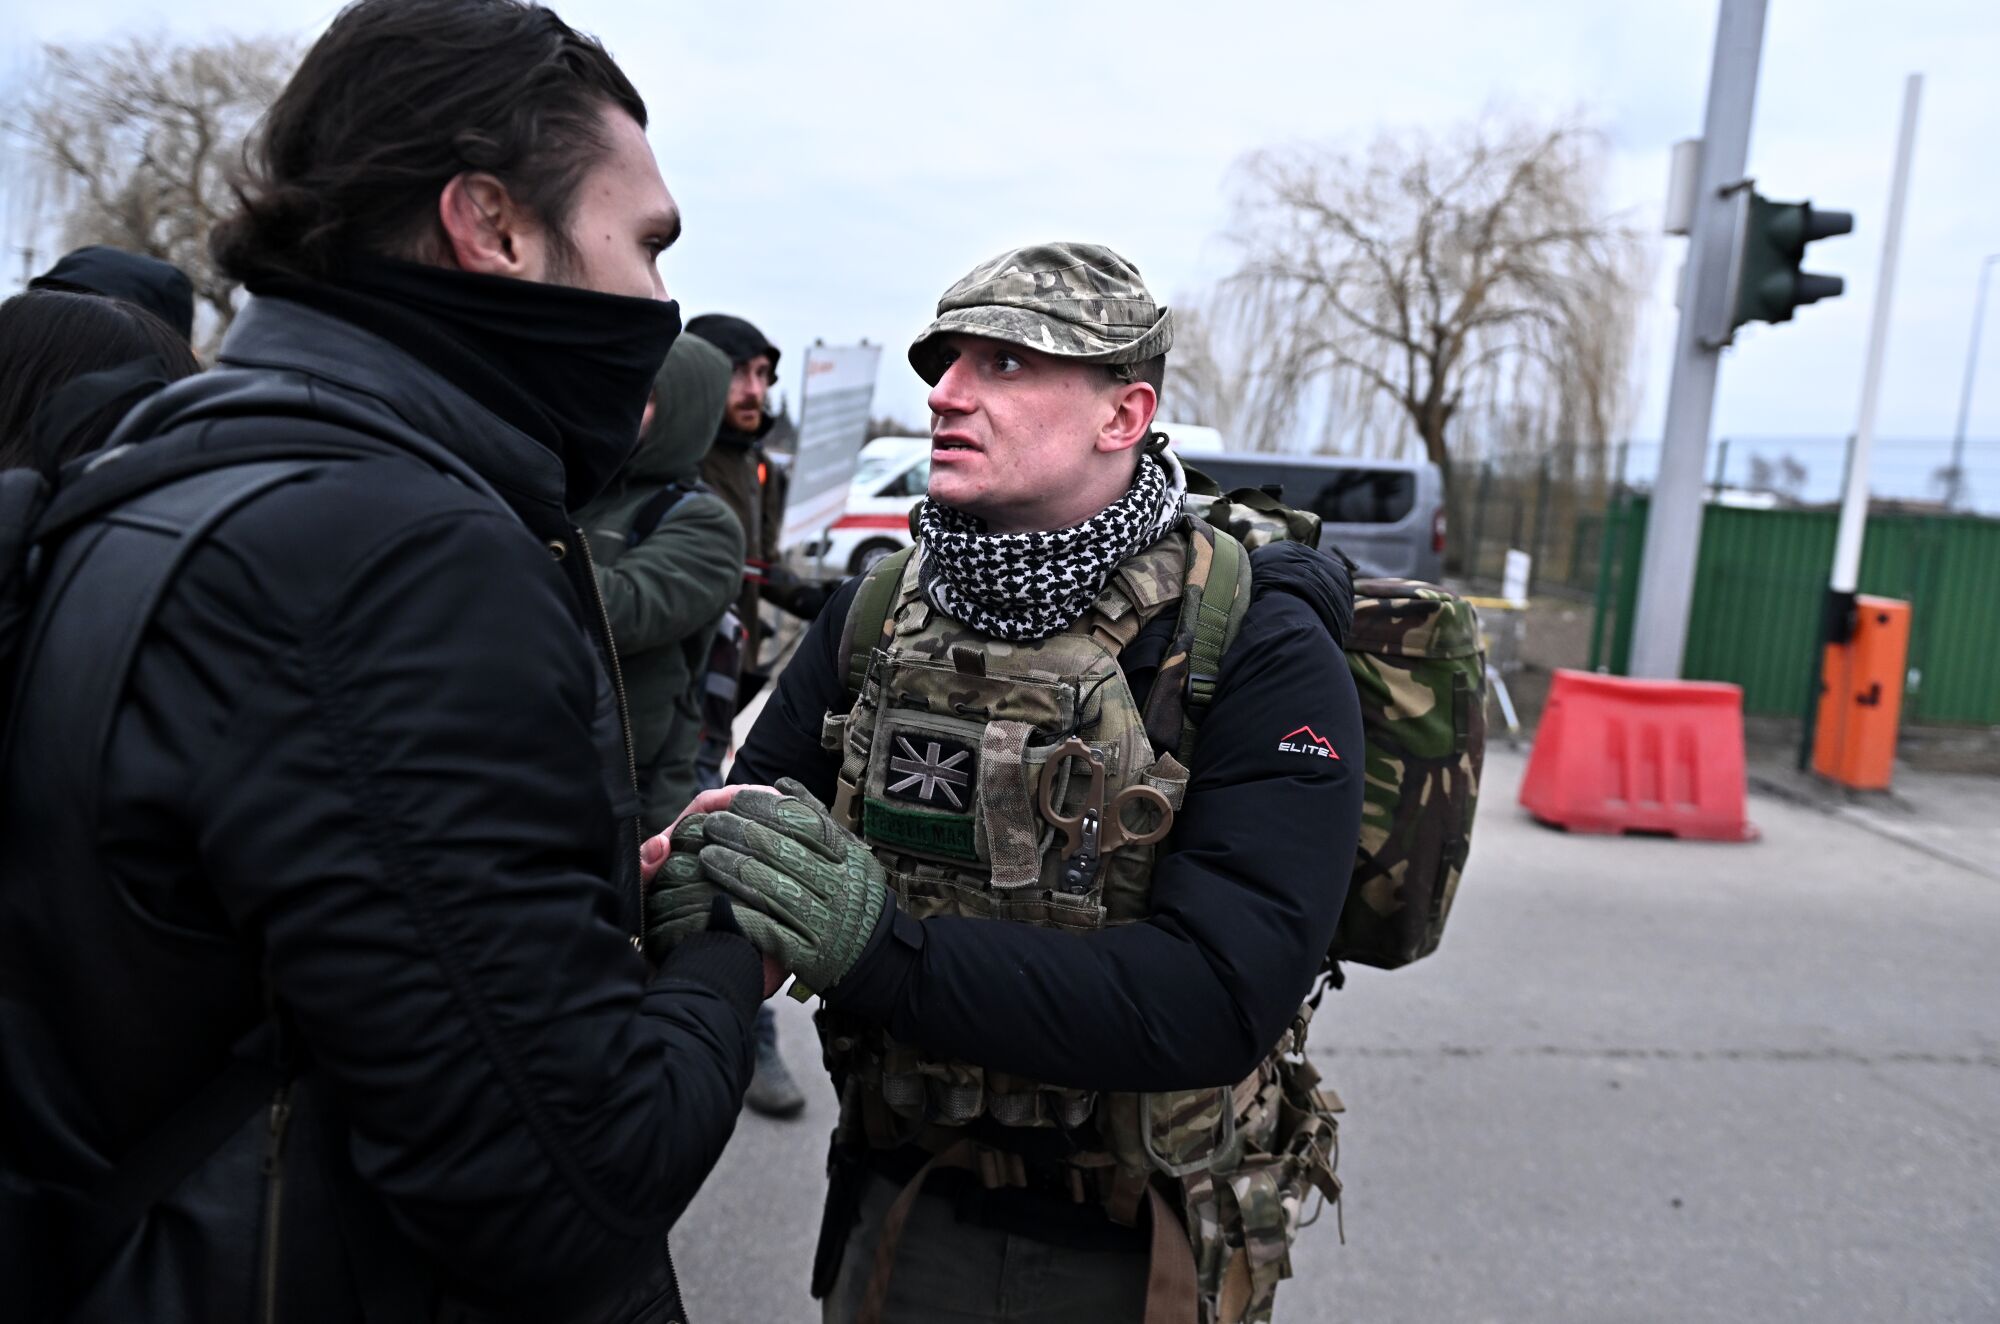 As refugees flee, a British volunteer soldier prepares to cross the border into Ukraine.